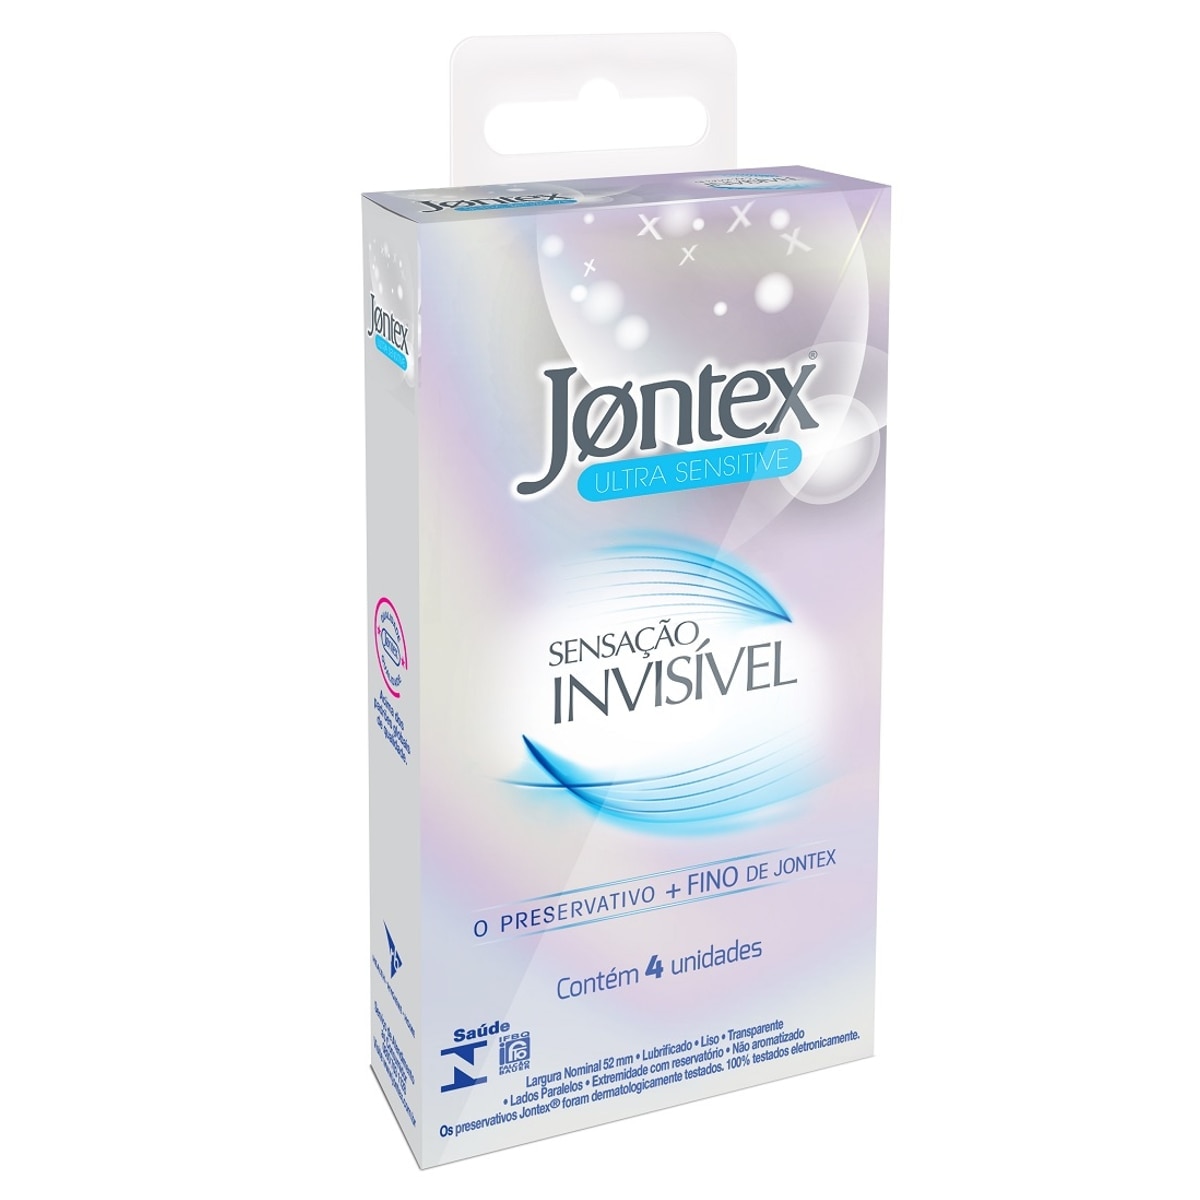 Preservativo Jontex Sensacao Invisivel 4 Unidades